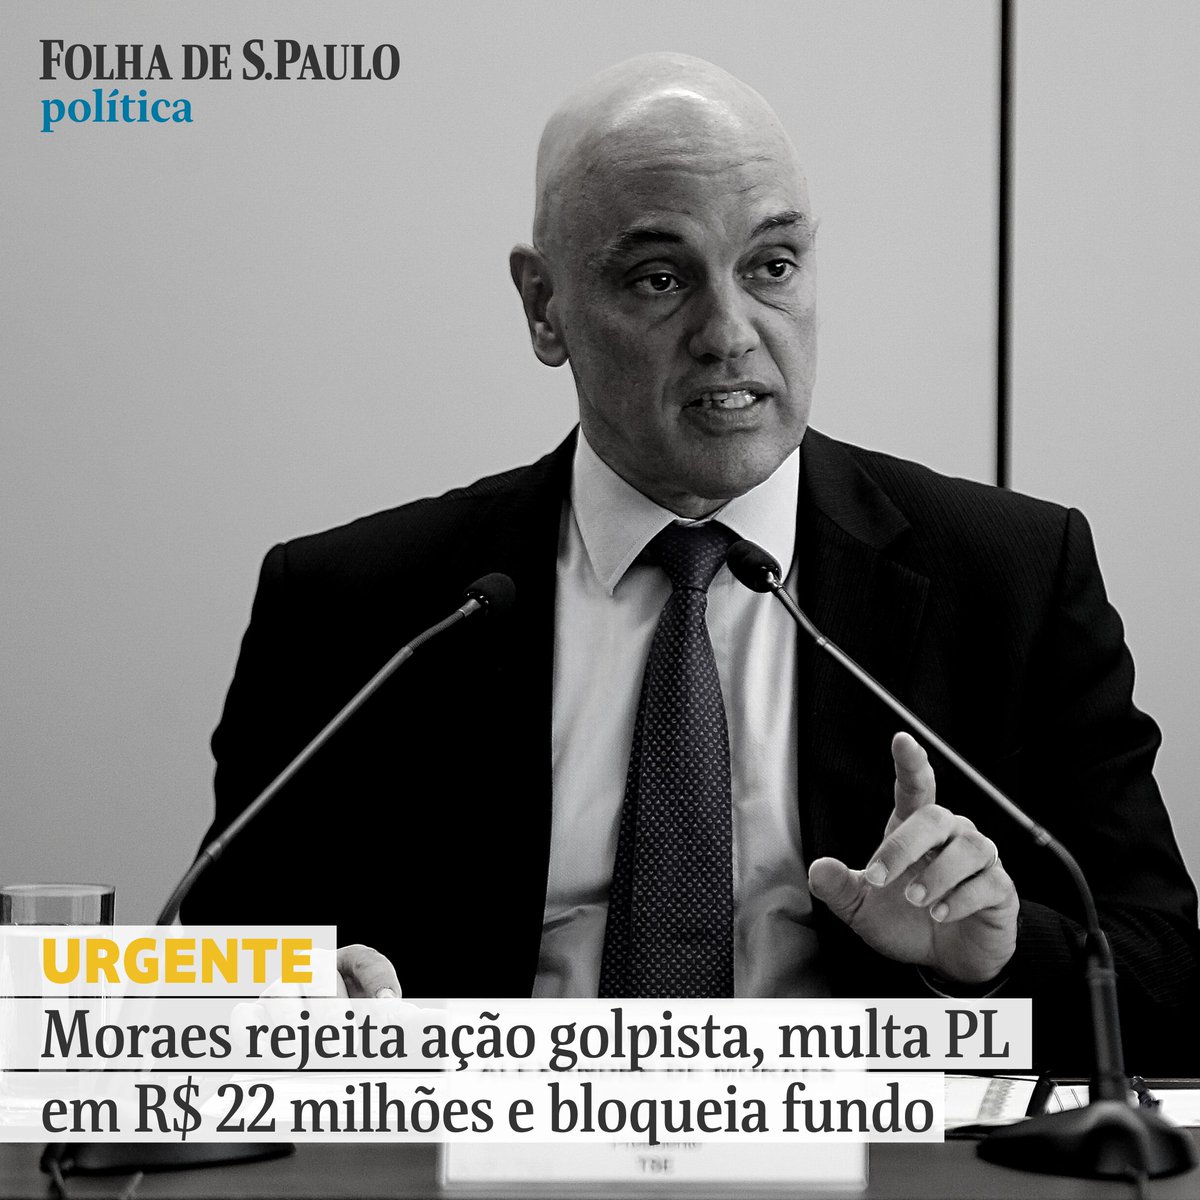 @folha's photo on 22 MILHÕES